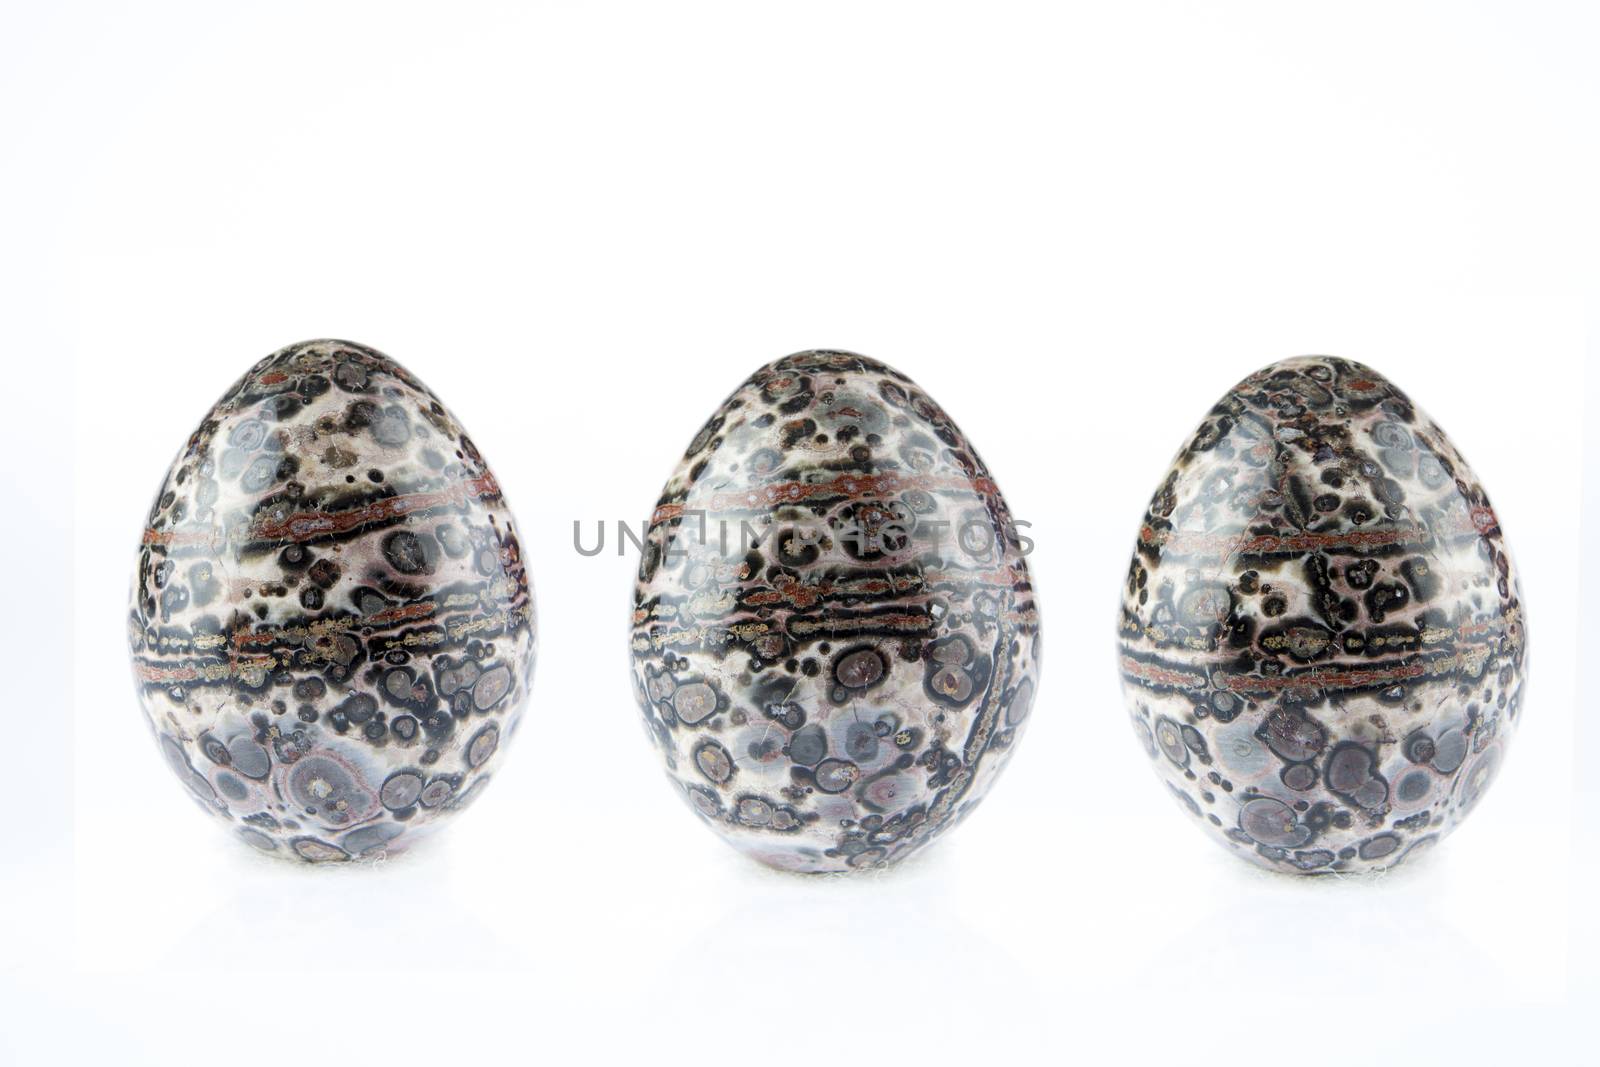 multicolored Agate stones egg shape on white background